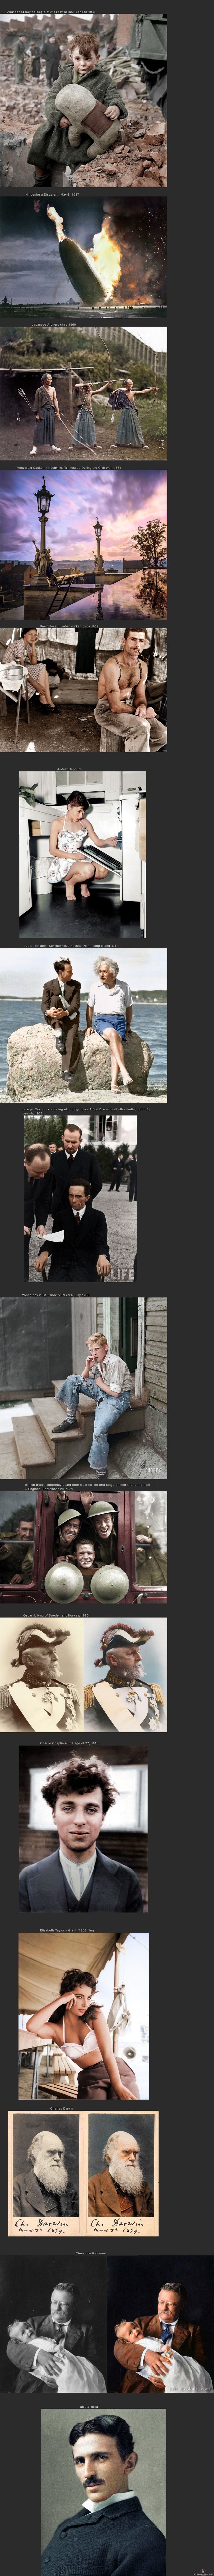 Incredible colorized historical photos